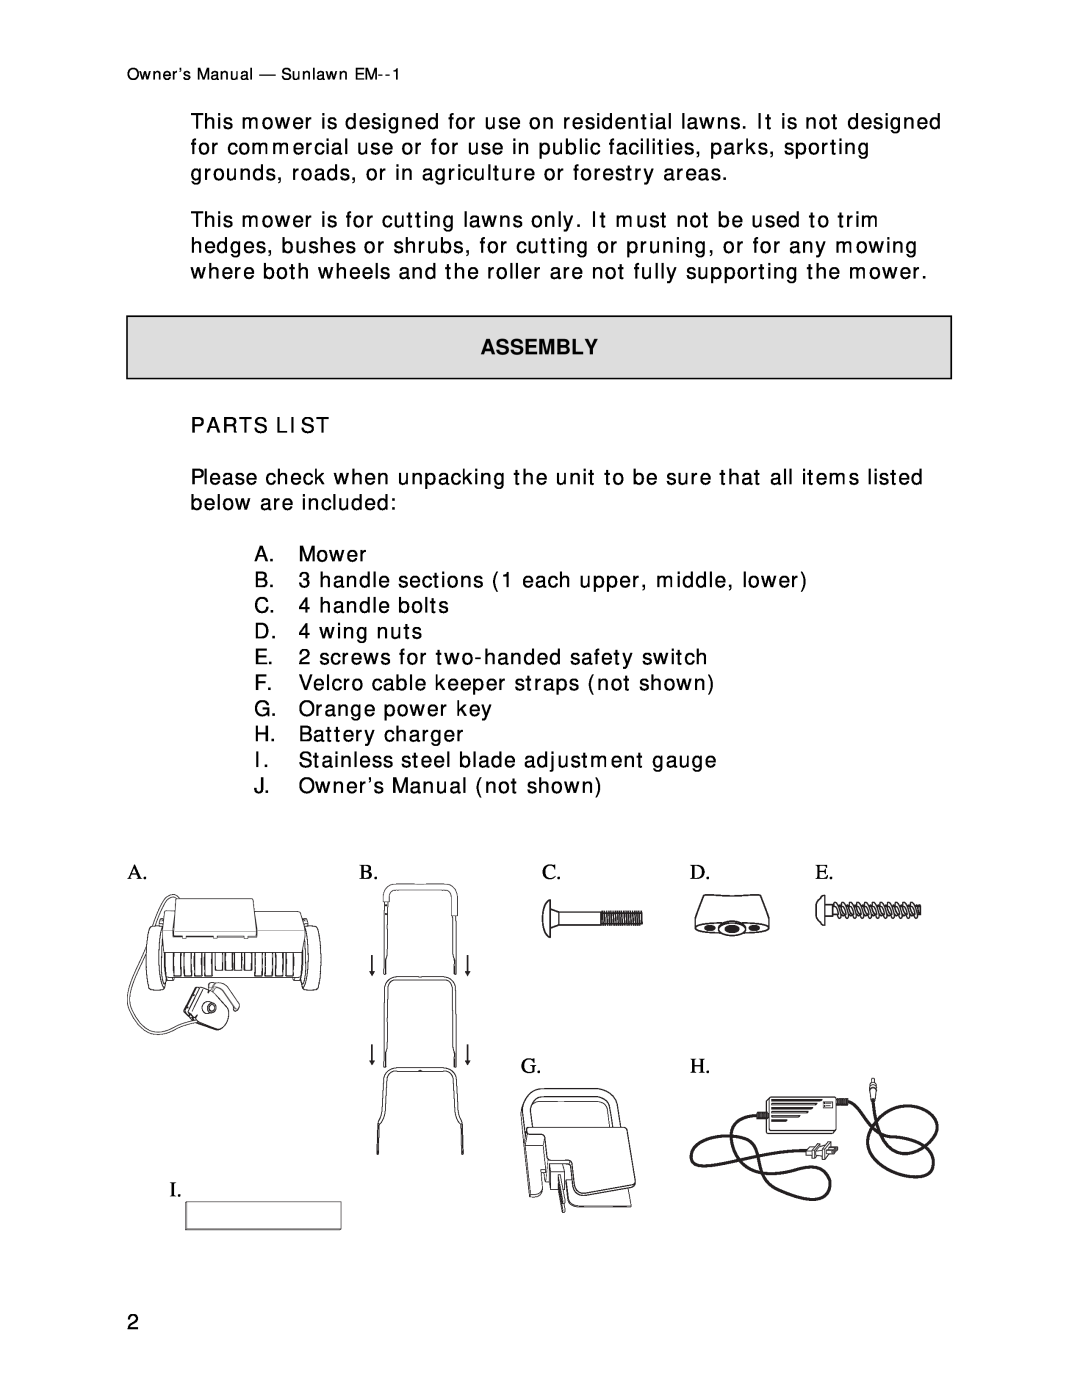 Sun Lawn EM-1 owner manual Parts List, Assembly 